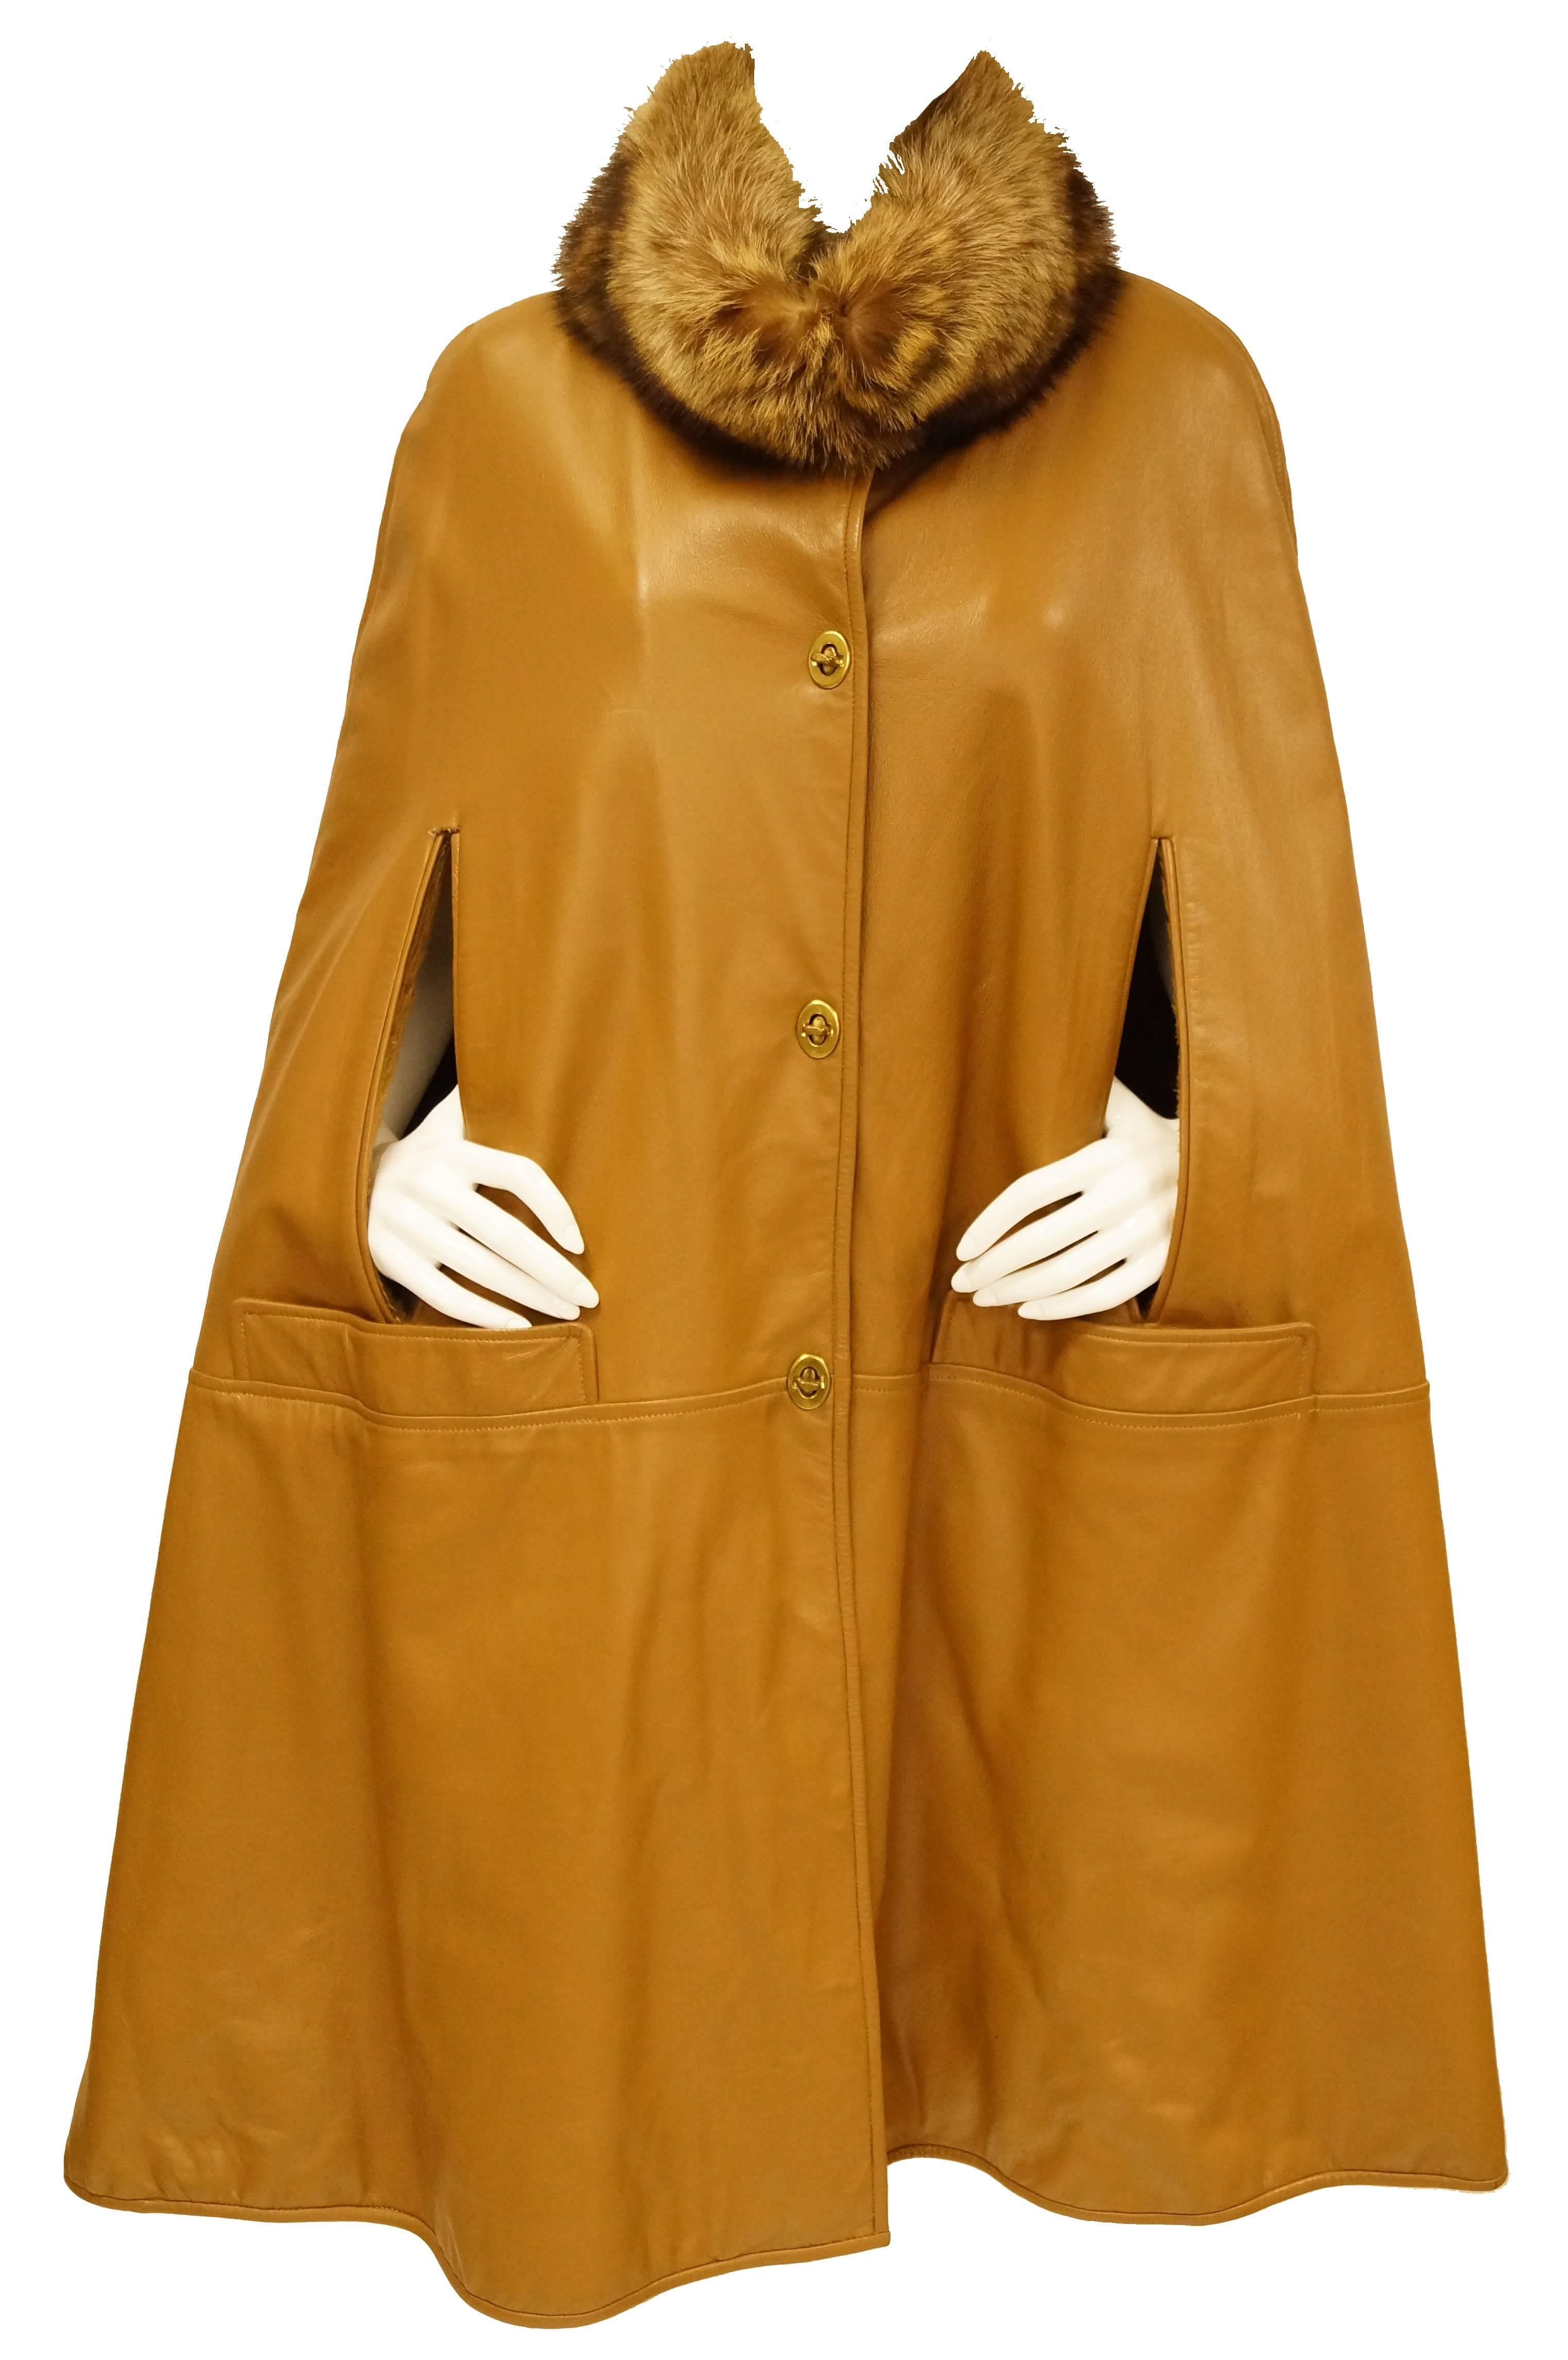 Orange Fabulous 1960s Bonnie Cashin Leather Cape w/ Fur Collar 